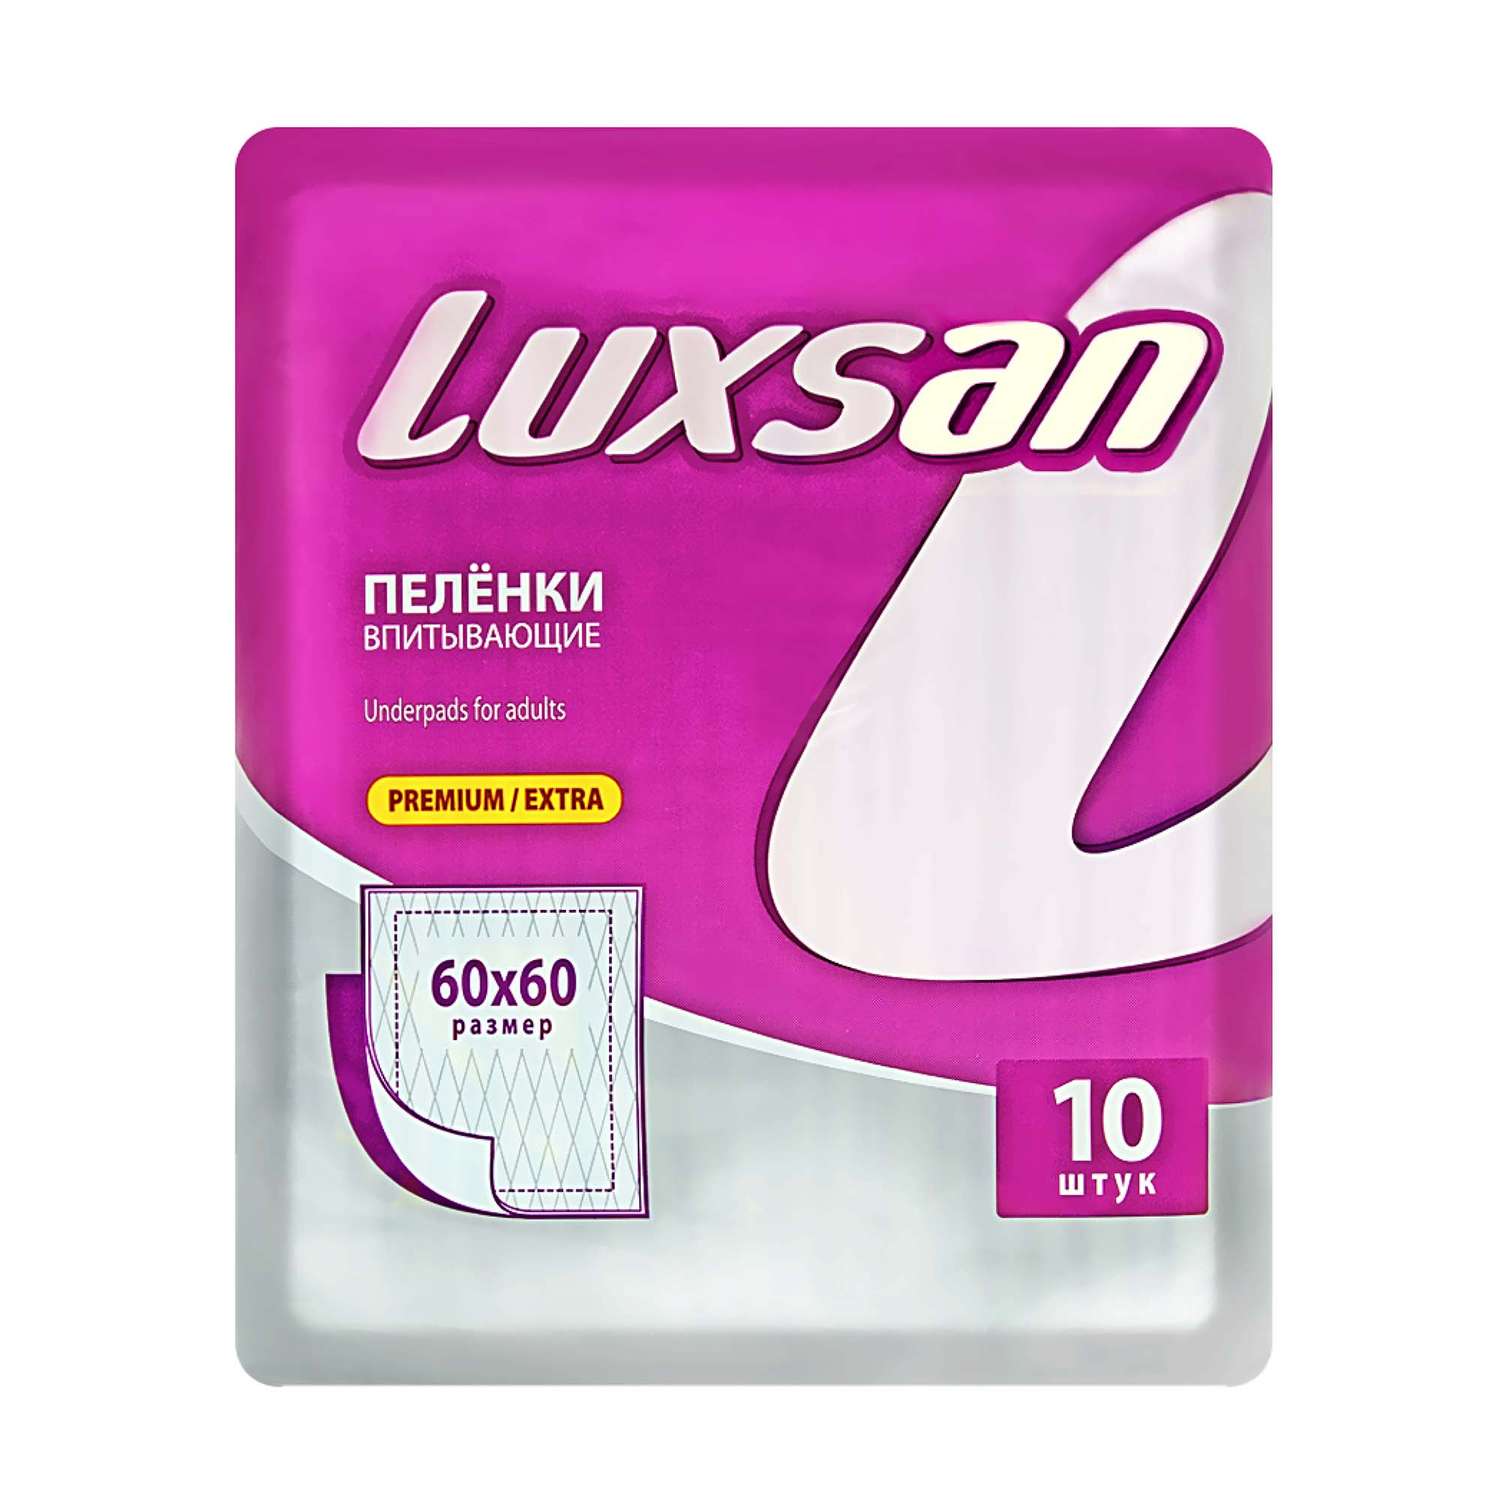 Пеленки впитывающие Luxsan Premium/Extra 60х60 10 шт - фото 1